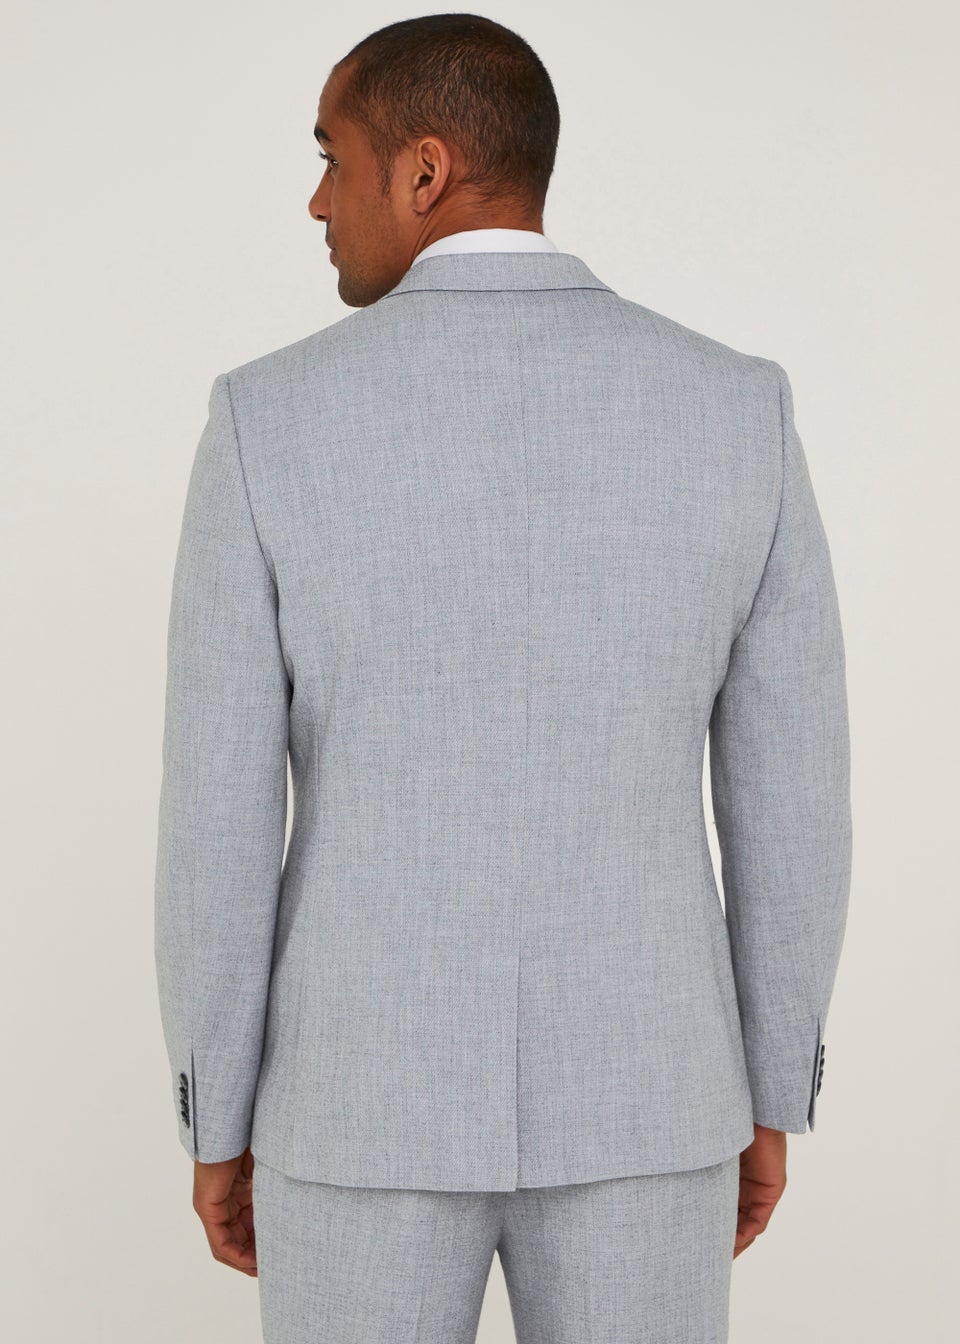 Taylor & Wright Hanks Grey Slim Fit Suit Jacket